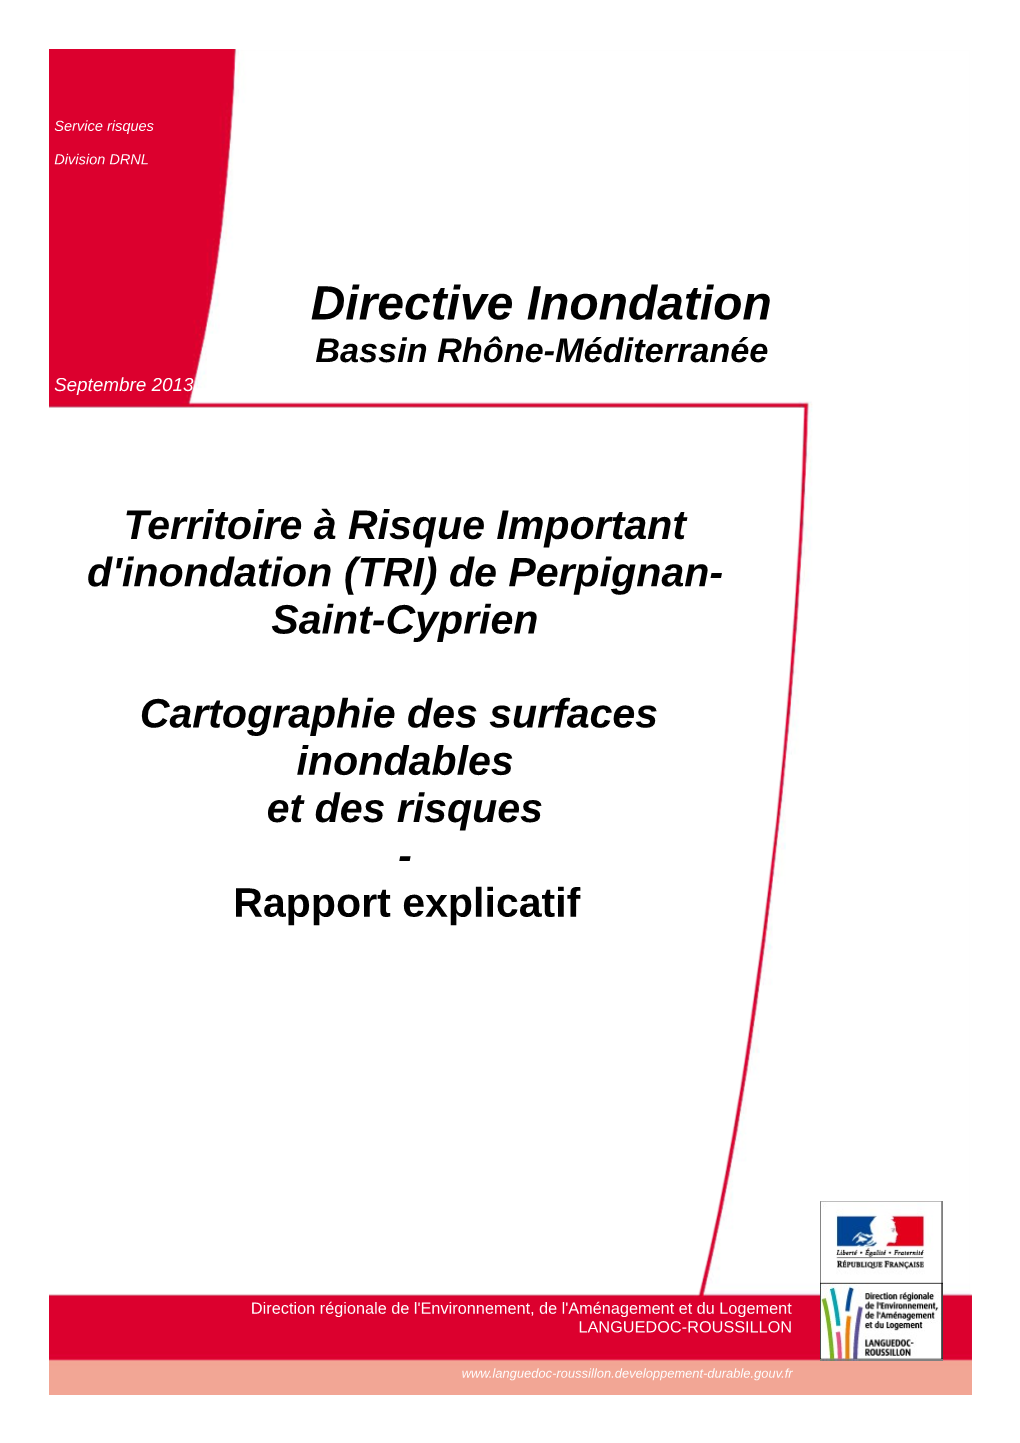 Directive Inondation Bassin Rhône-Méditerranée Septembre 2013